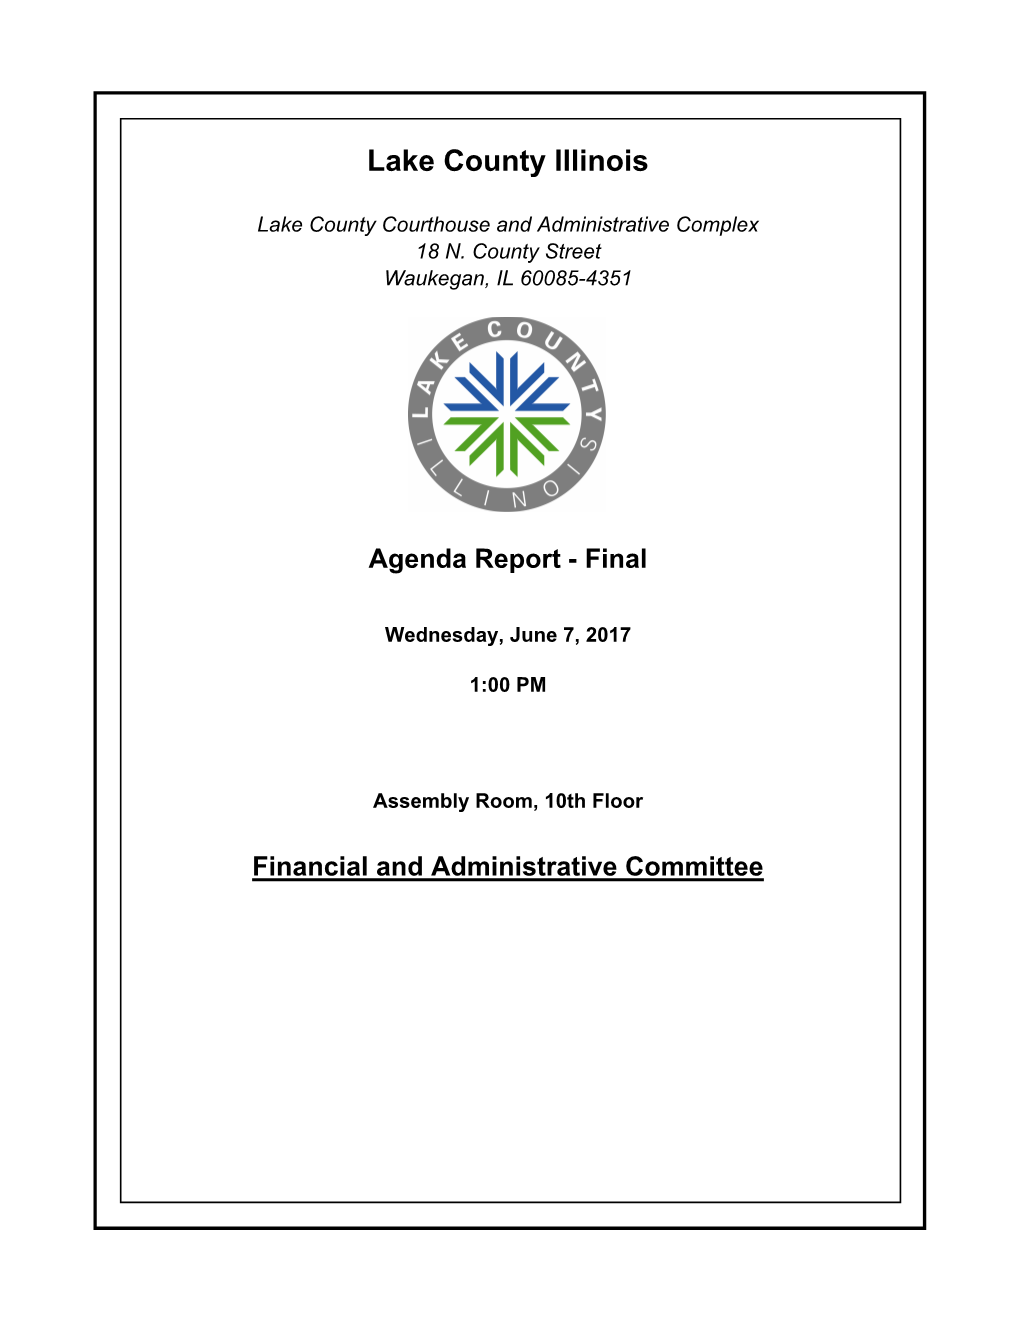 Agenda Report - Final